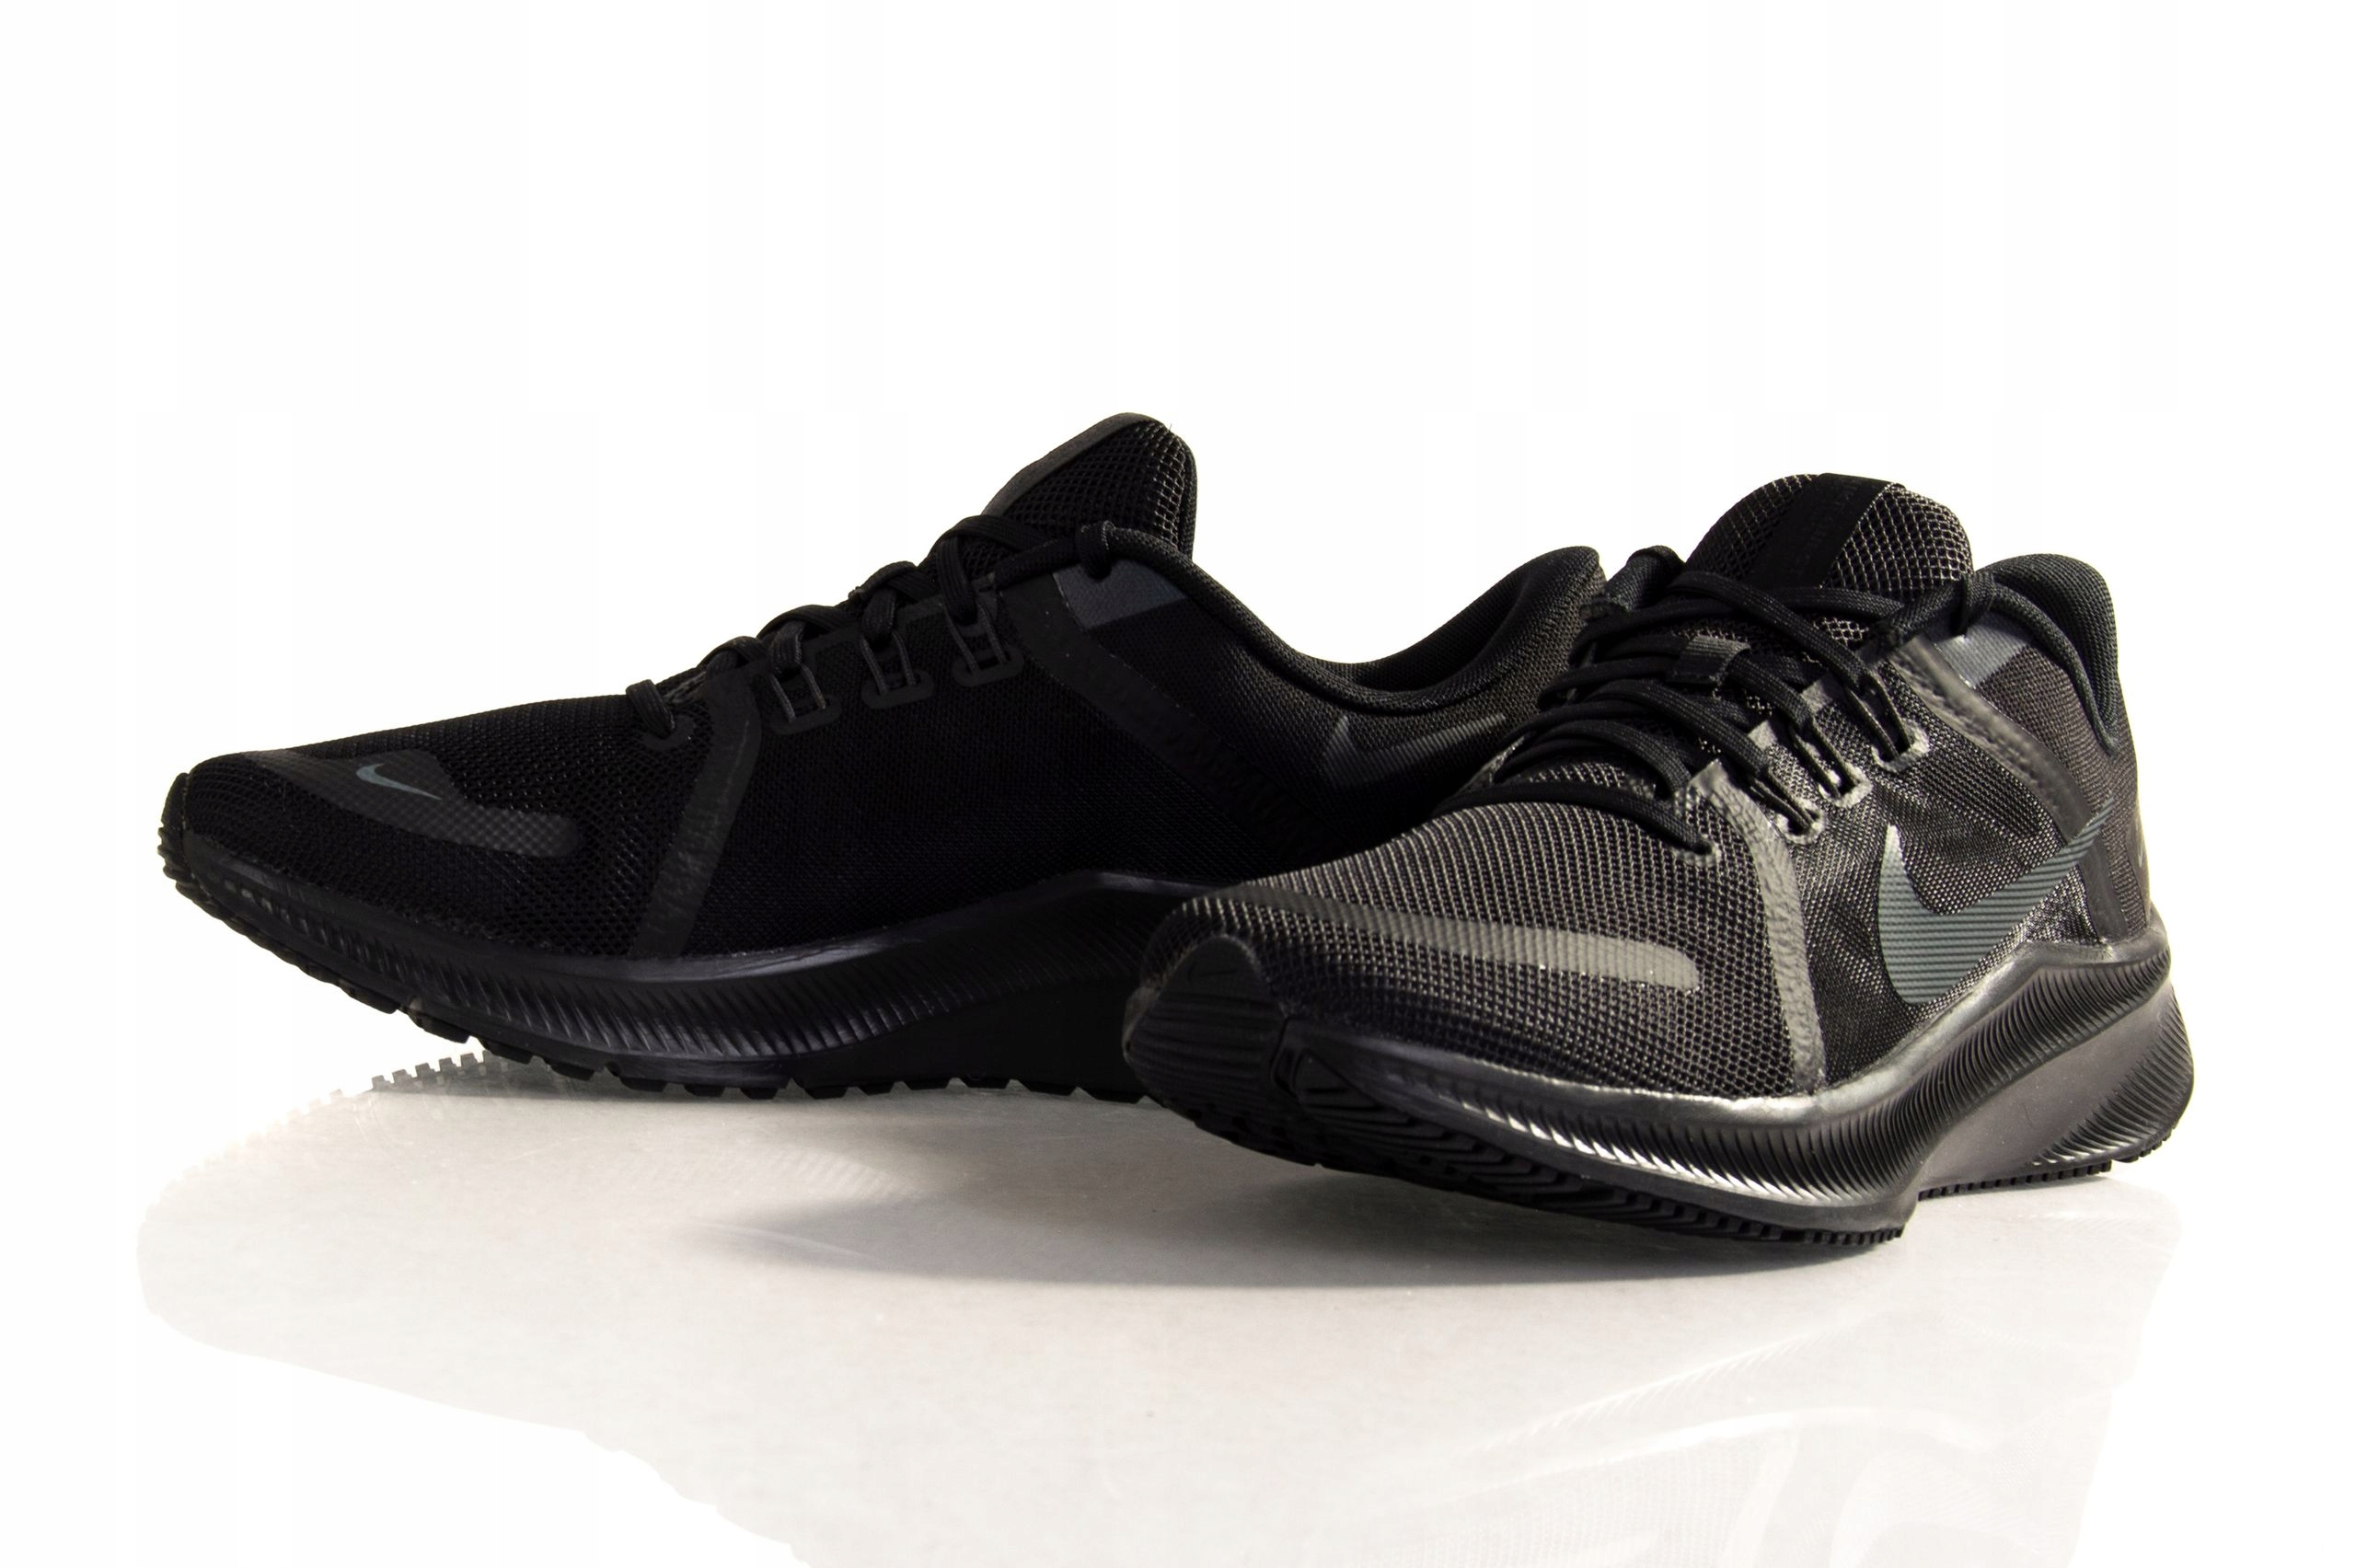 BUTY Nike MĘSKIE QUEST 4 DA1105-002 CZARNE 12672988010 - Allegro.pl